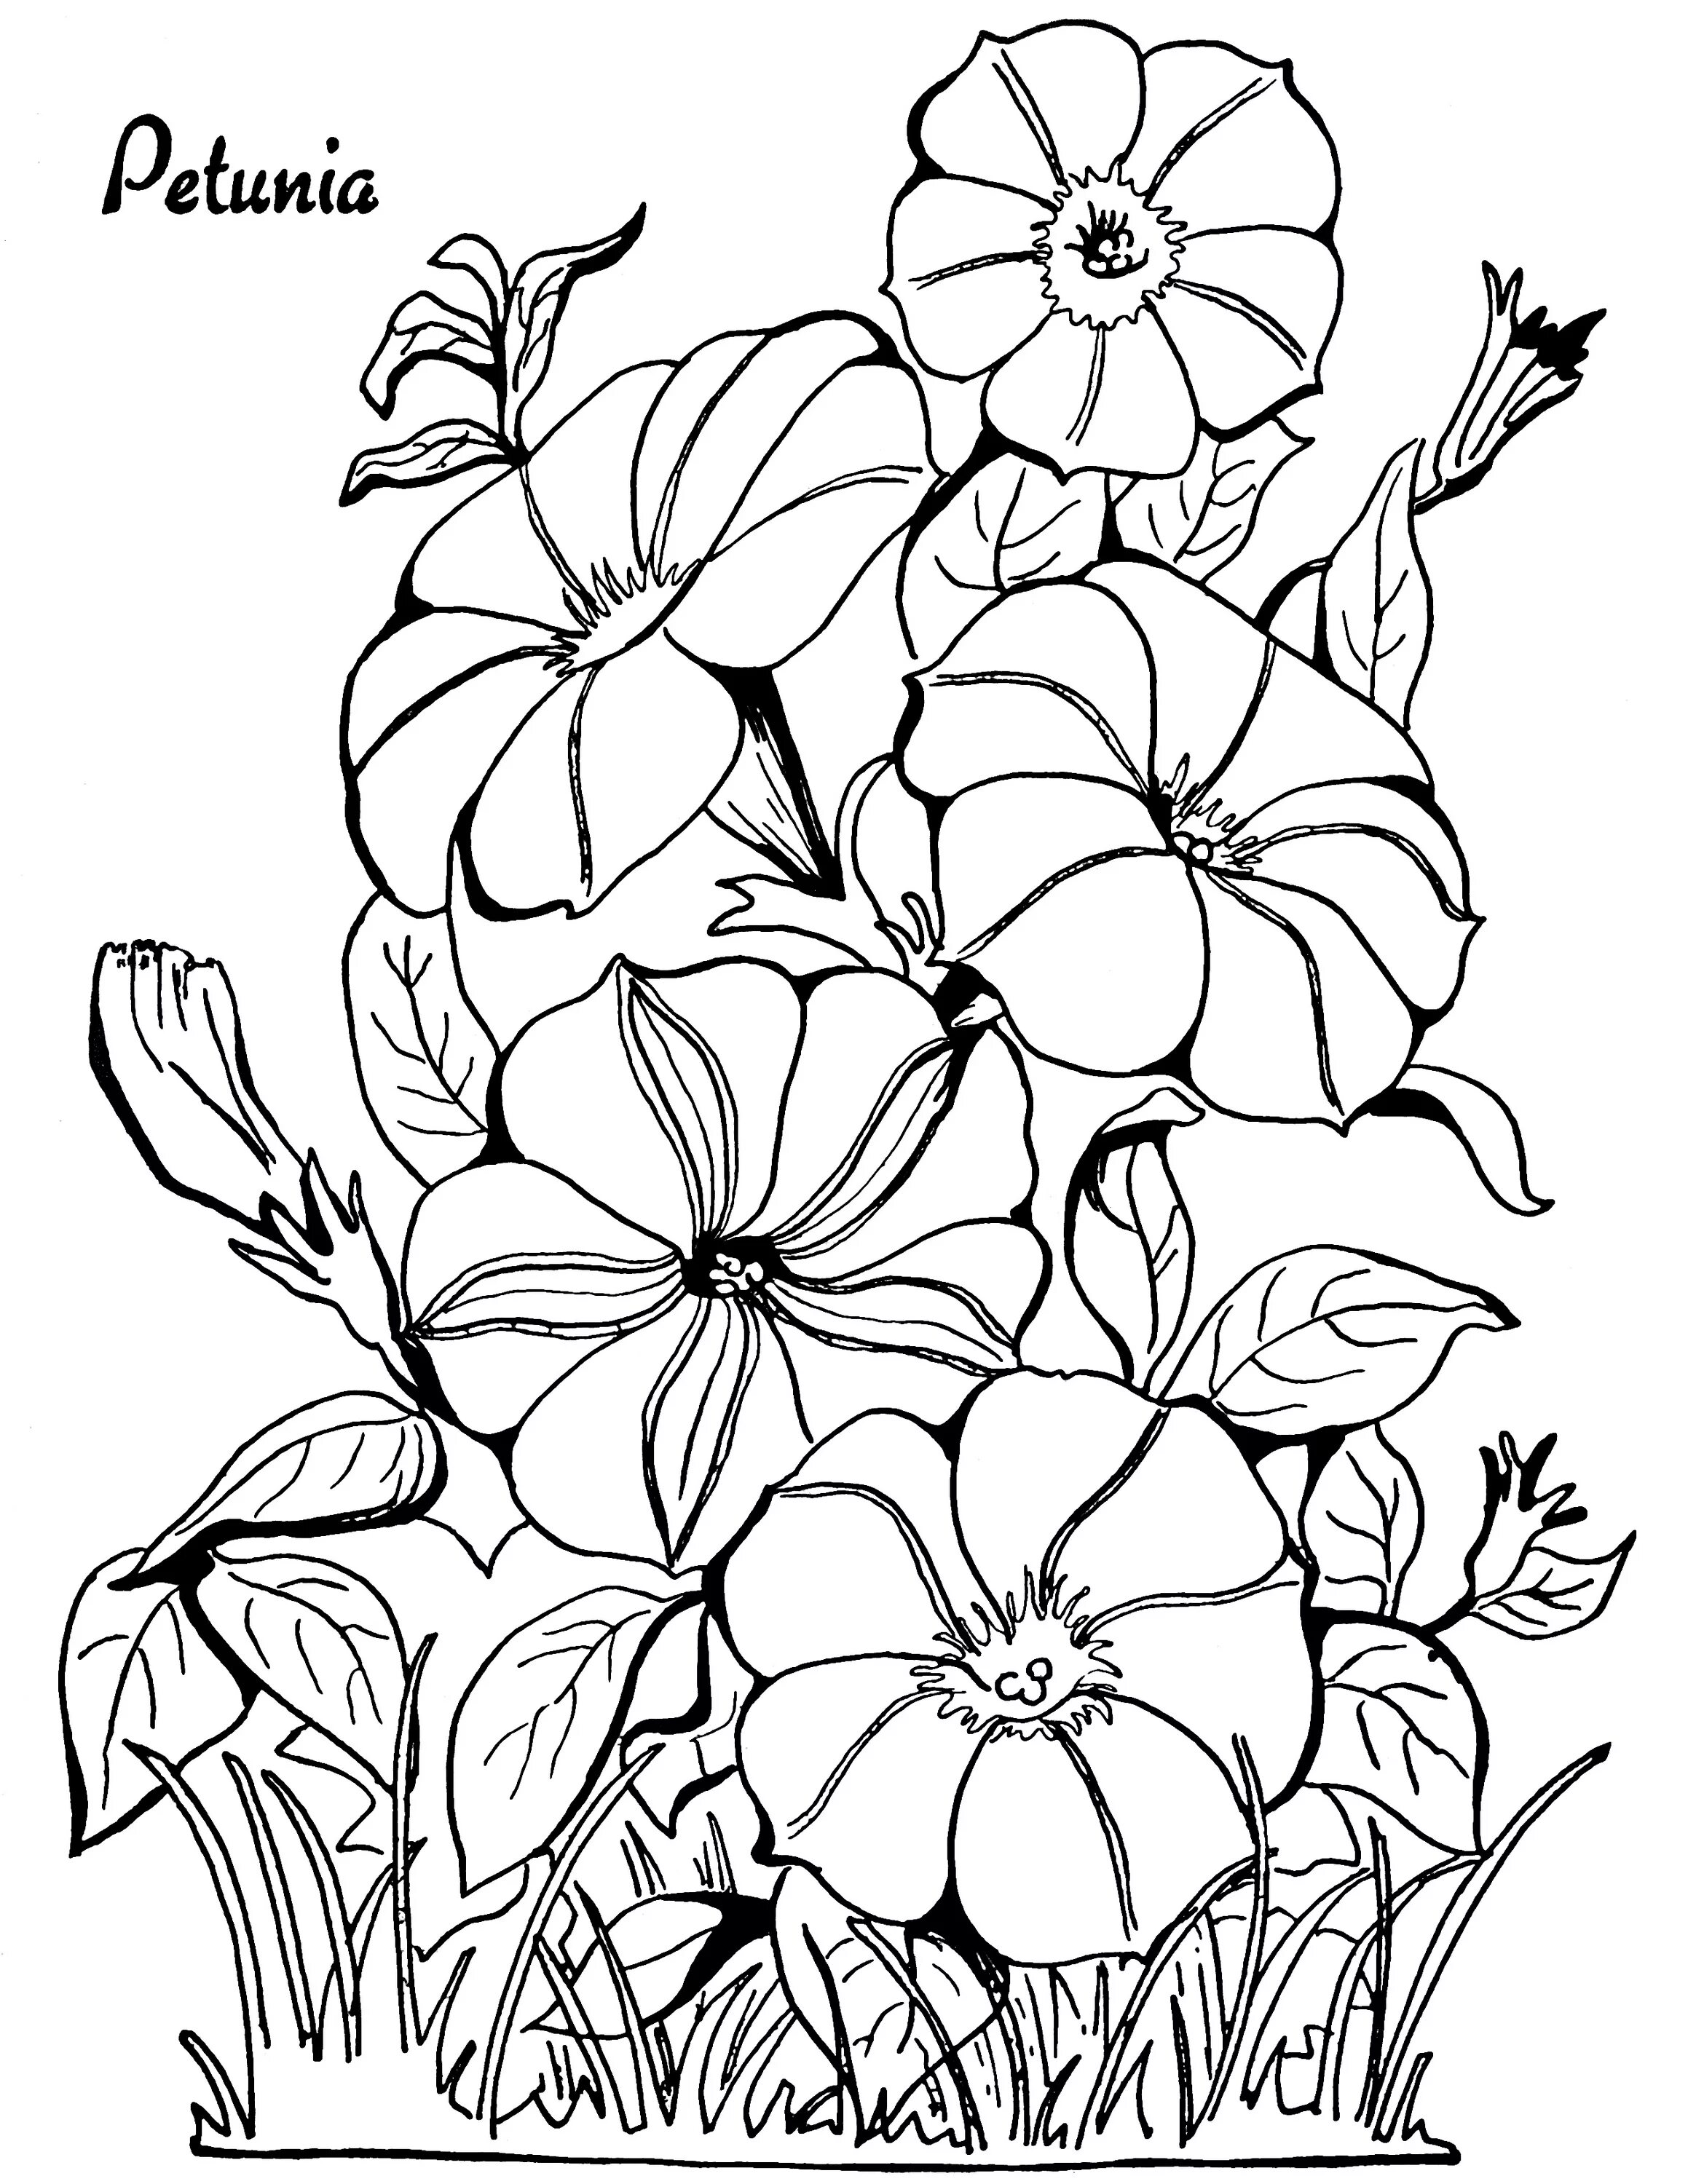 Coloring page dazzling petunia